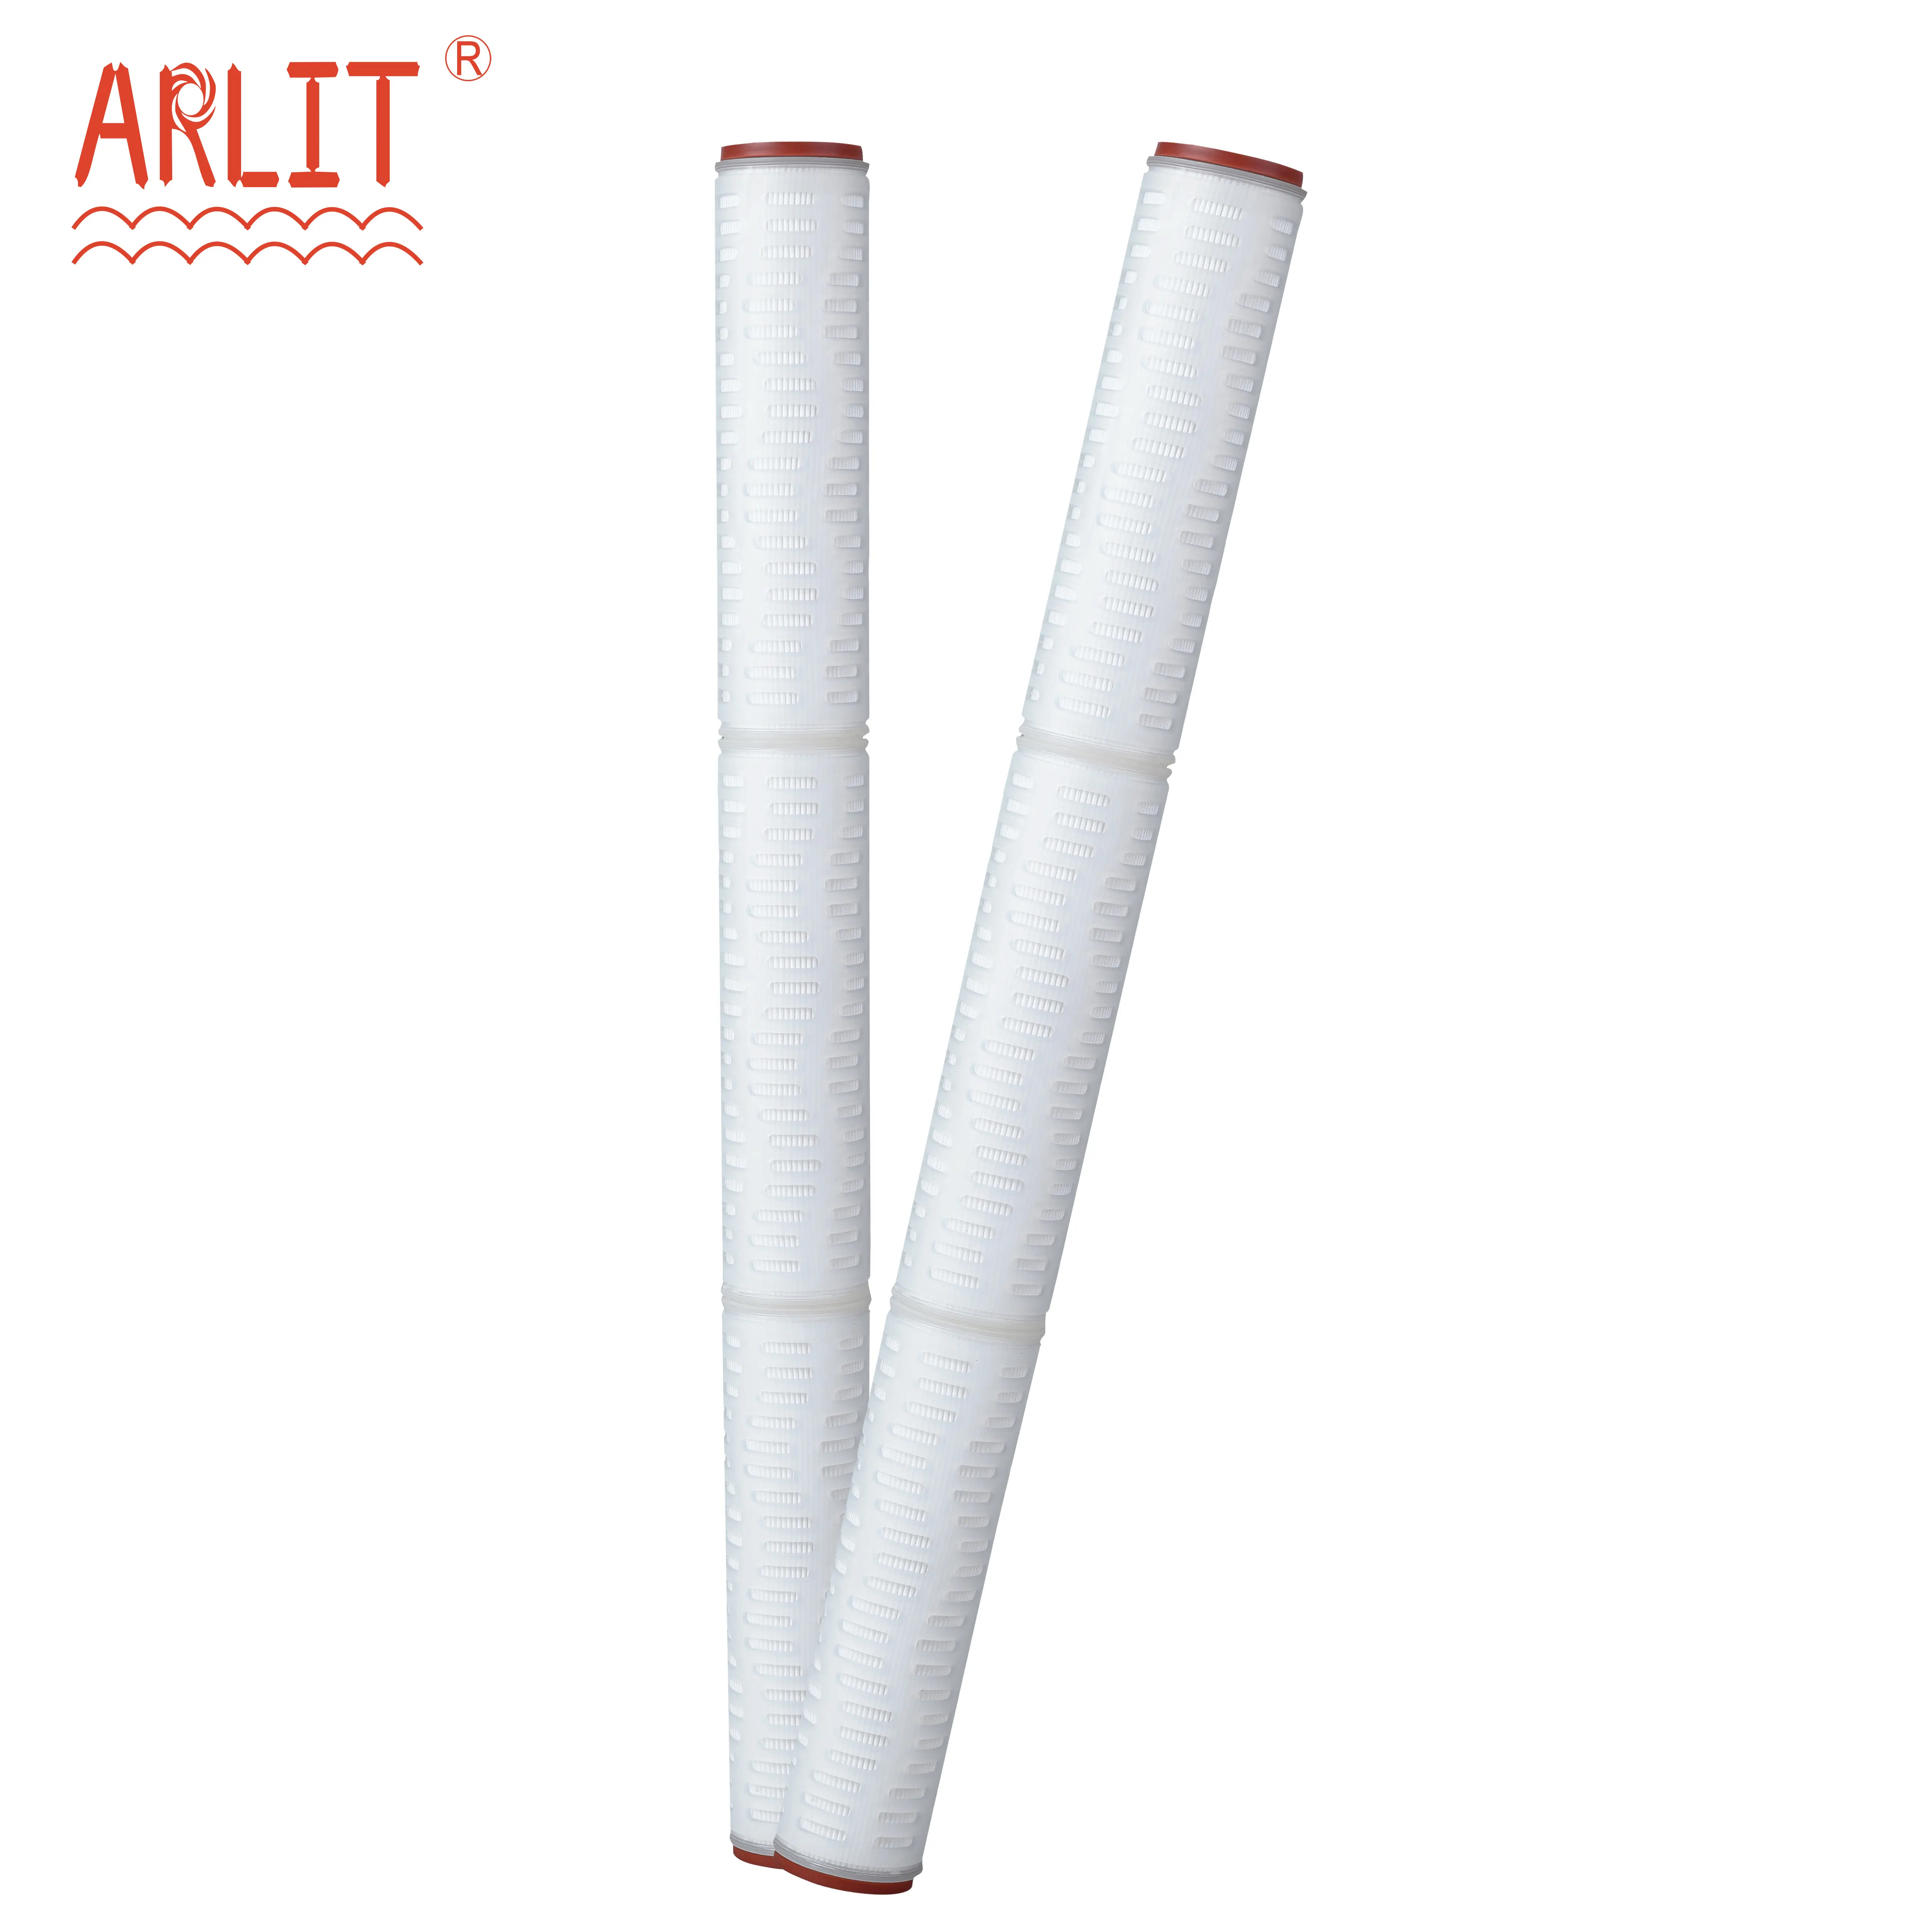 ARLIT BRAND 30インチ0.22ミクロン疎水性PTFE膜プリーツフィルターカートリッジ (空気水フィルター用)